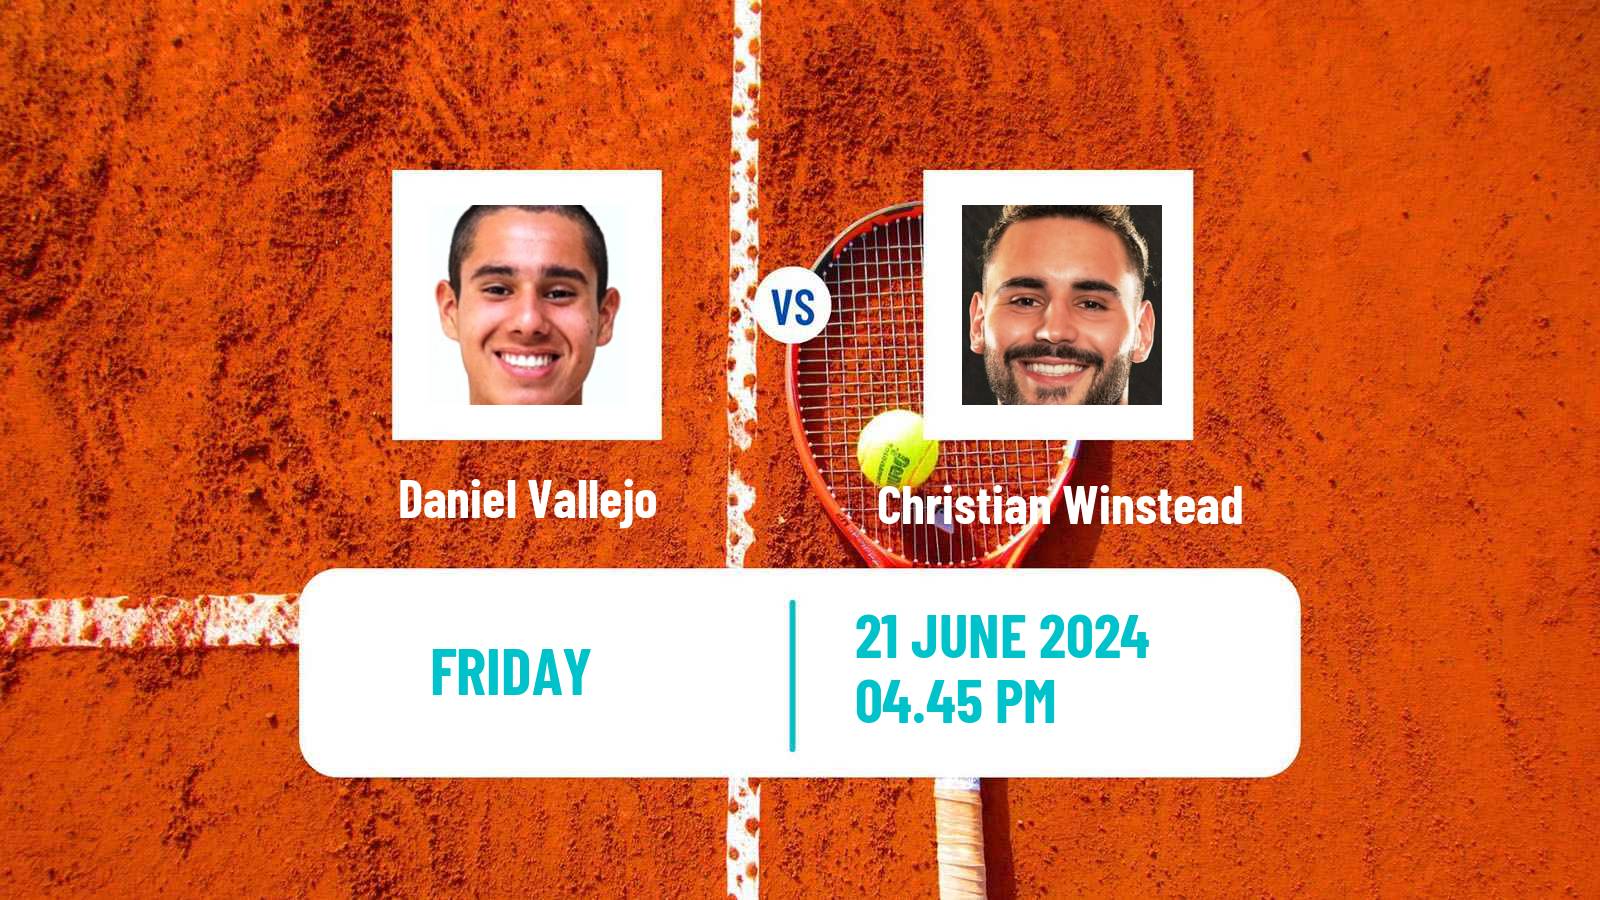 Tennis Davis Cup Group III Daniel Vallejo - Christian Winstead